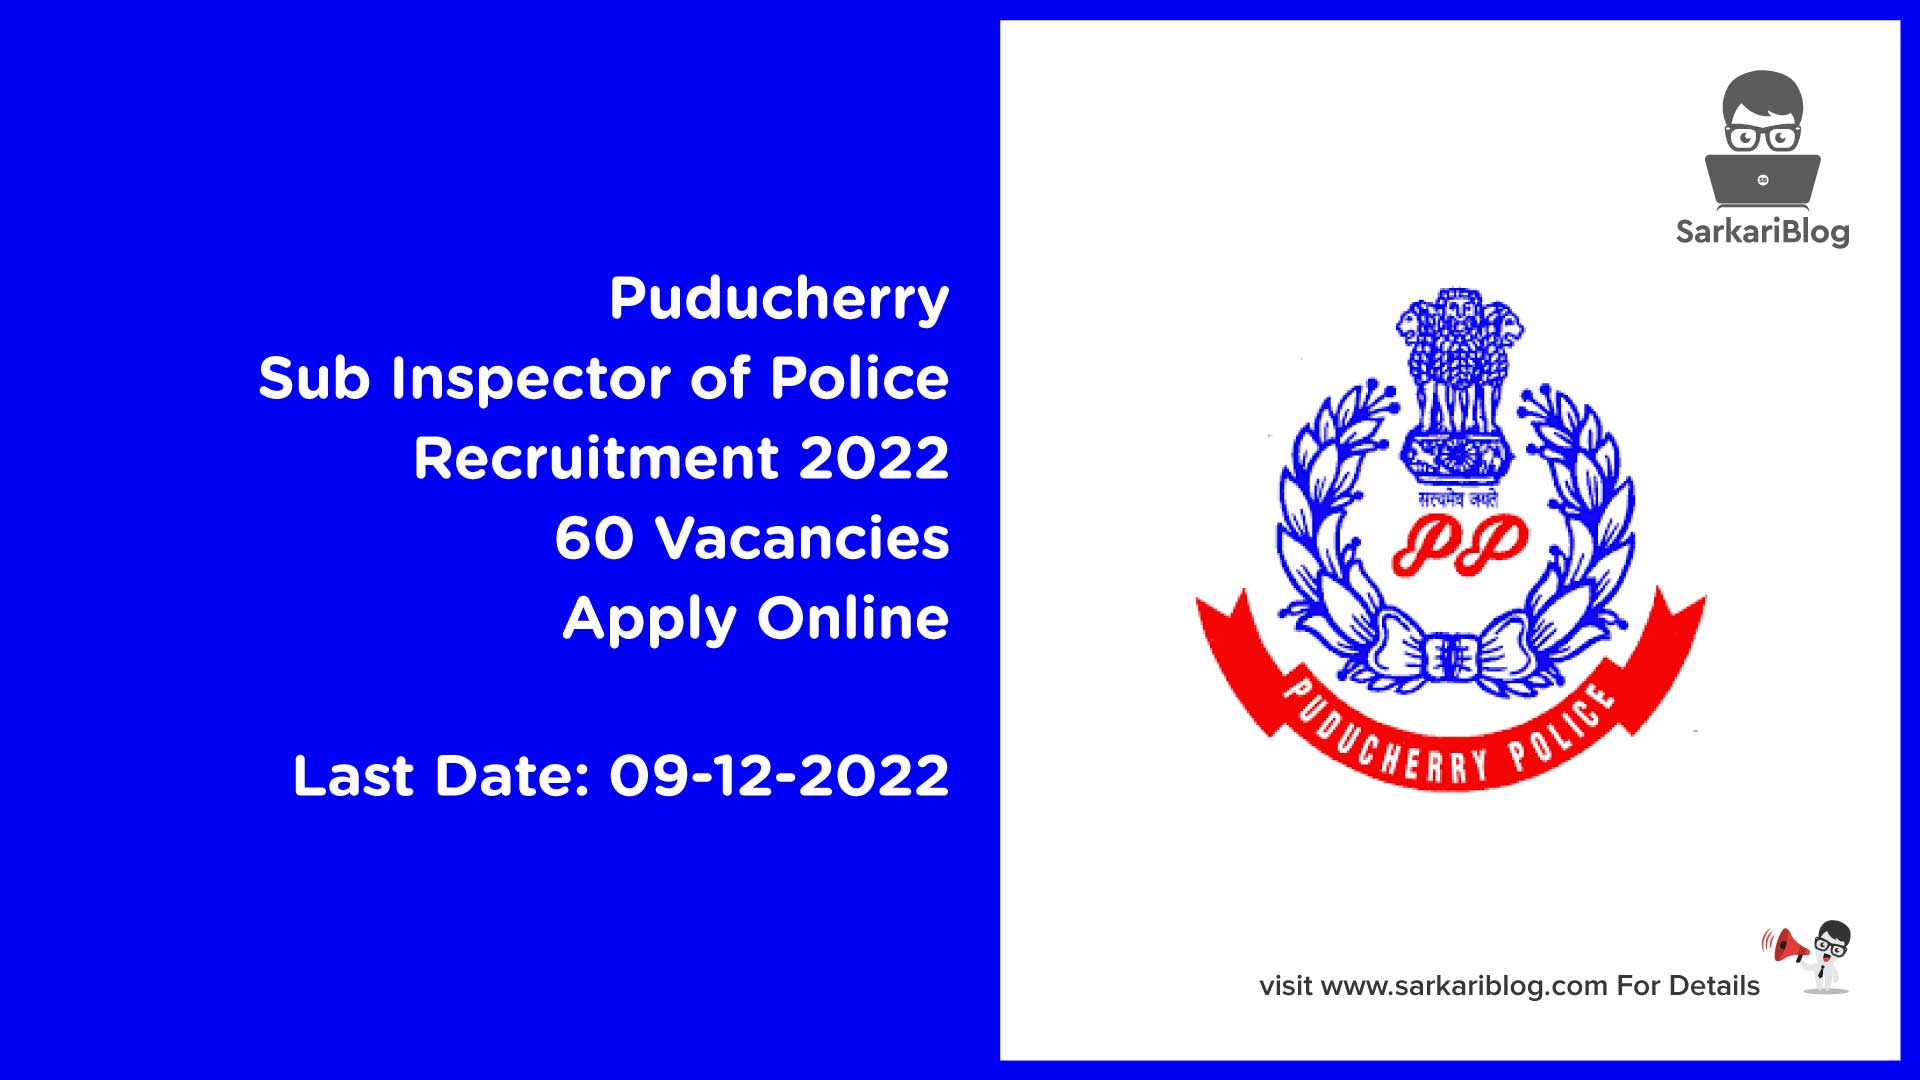 Puducherry Sub Inspector of Police Recruitment 2022